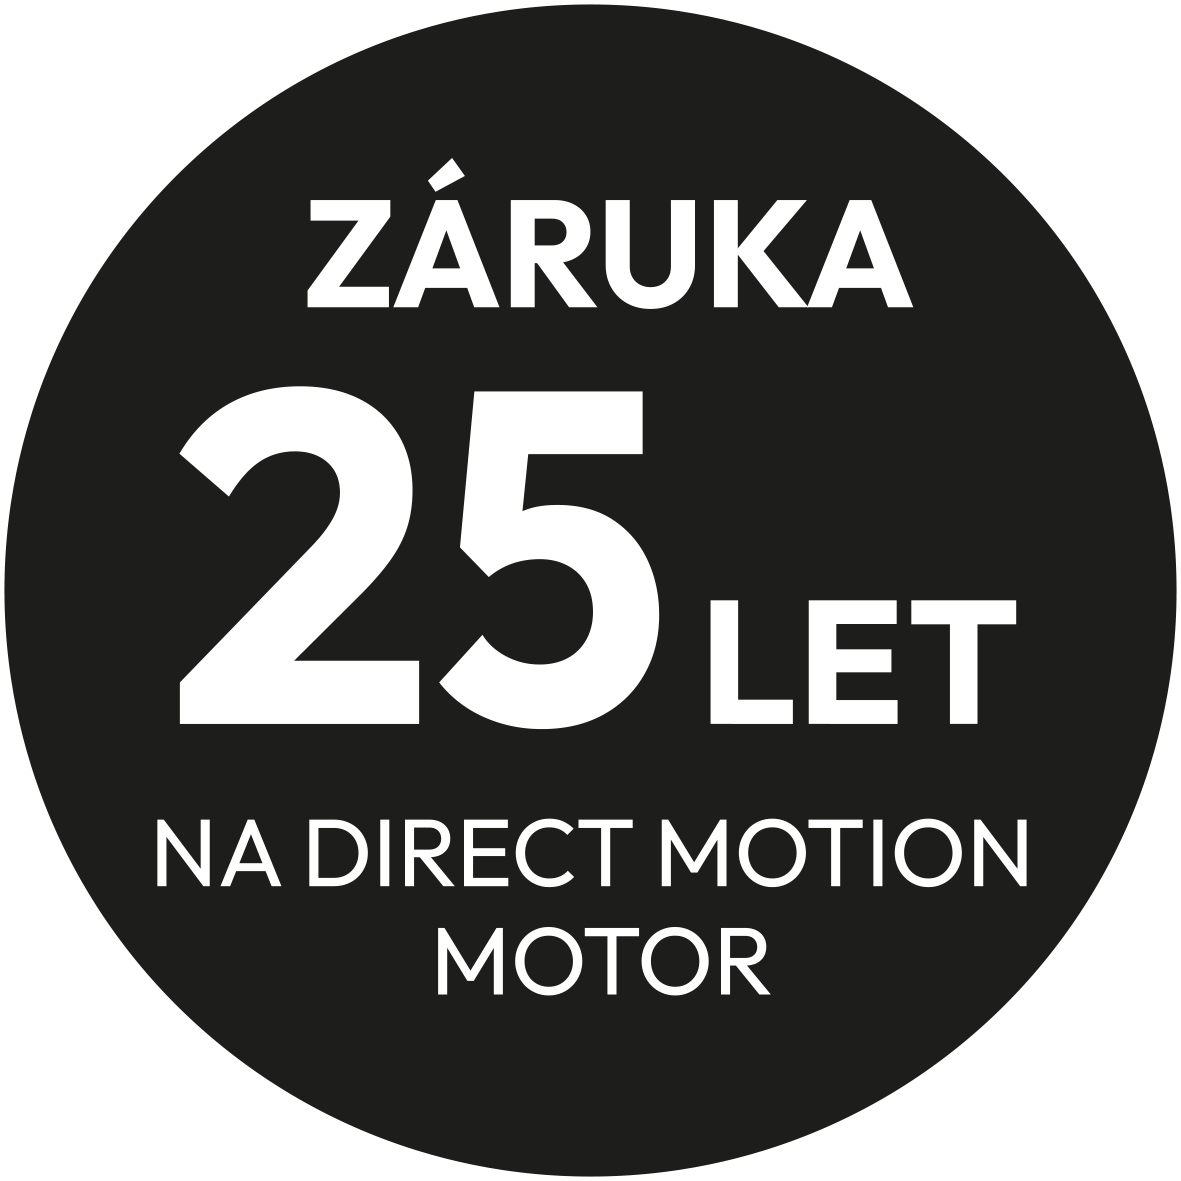 zaruka-25-let-direct-motion-motor